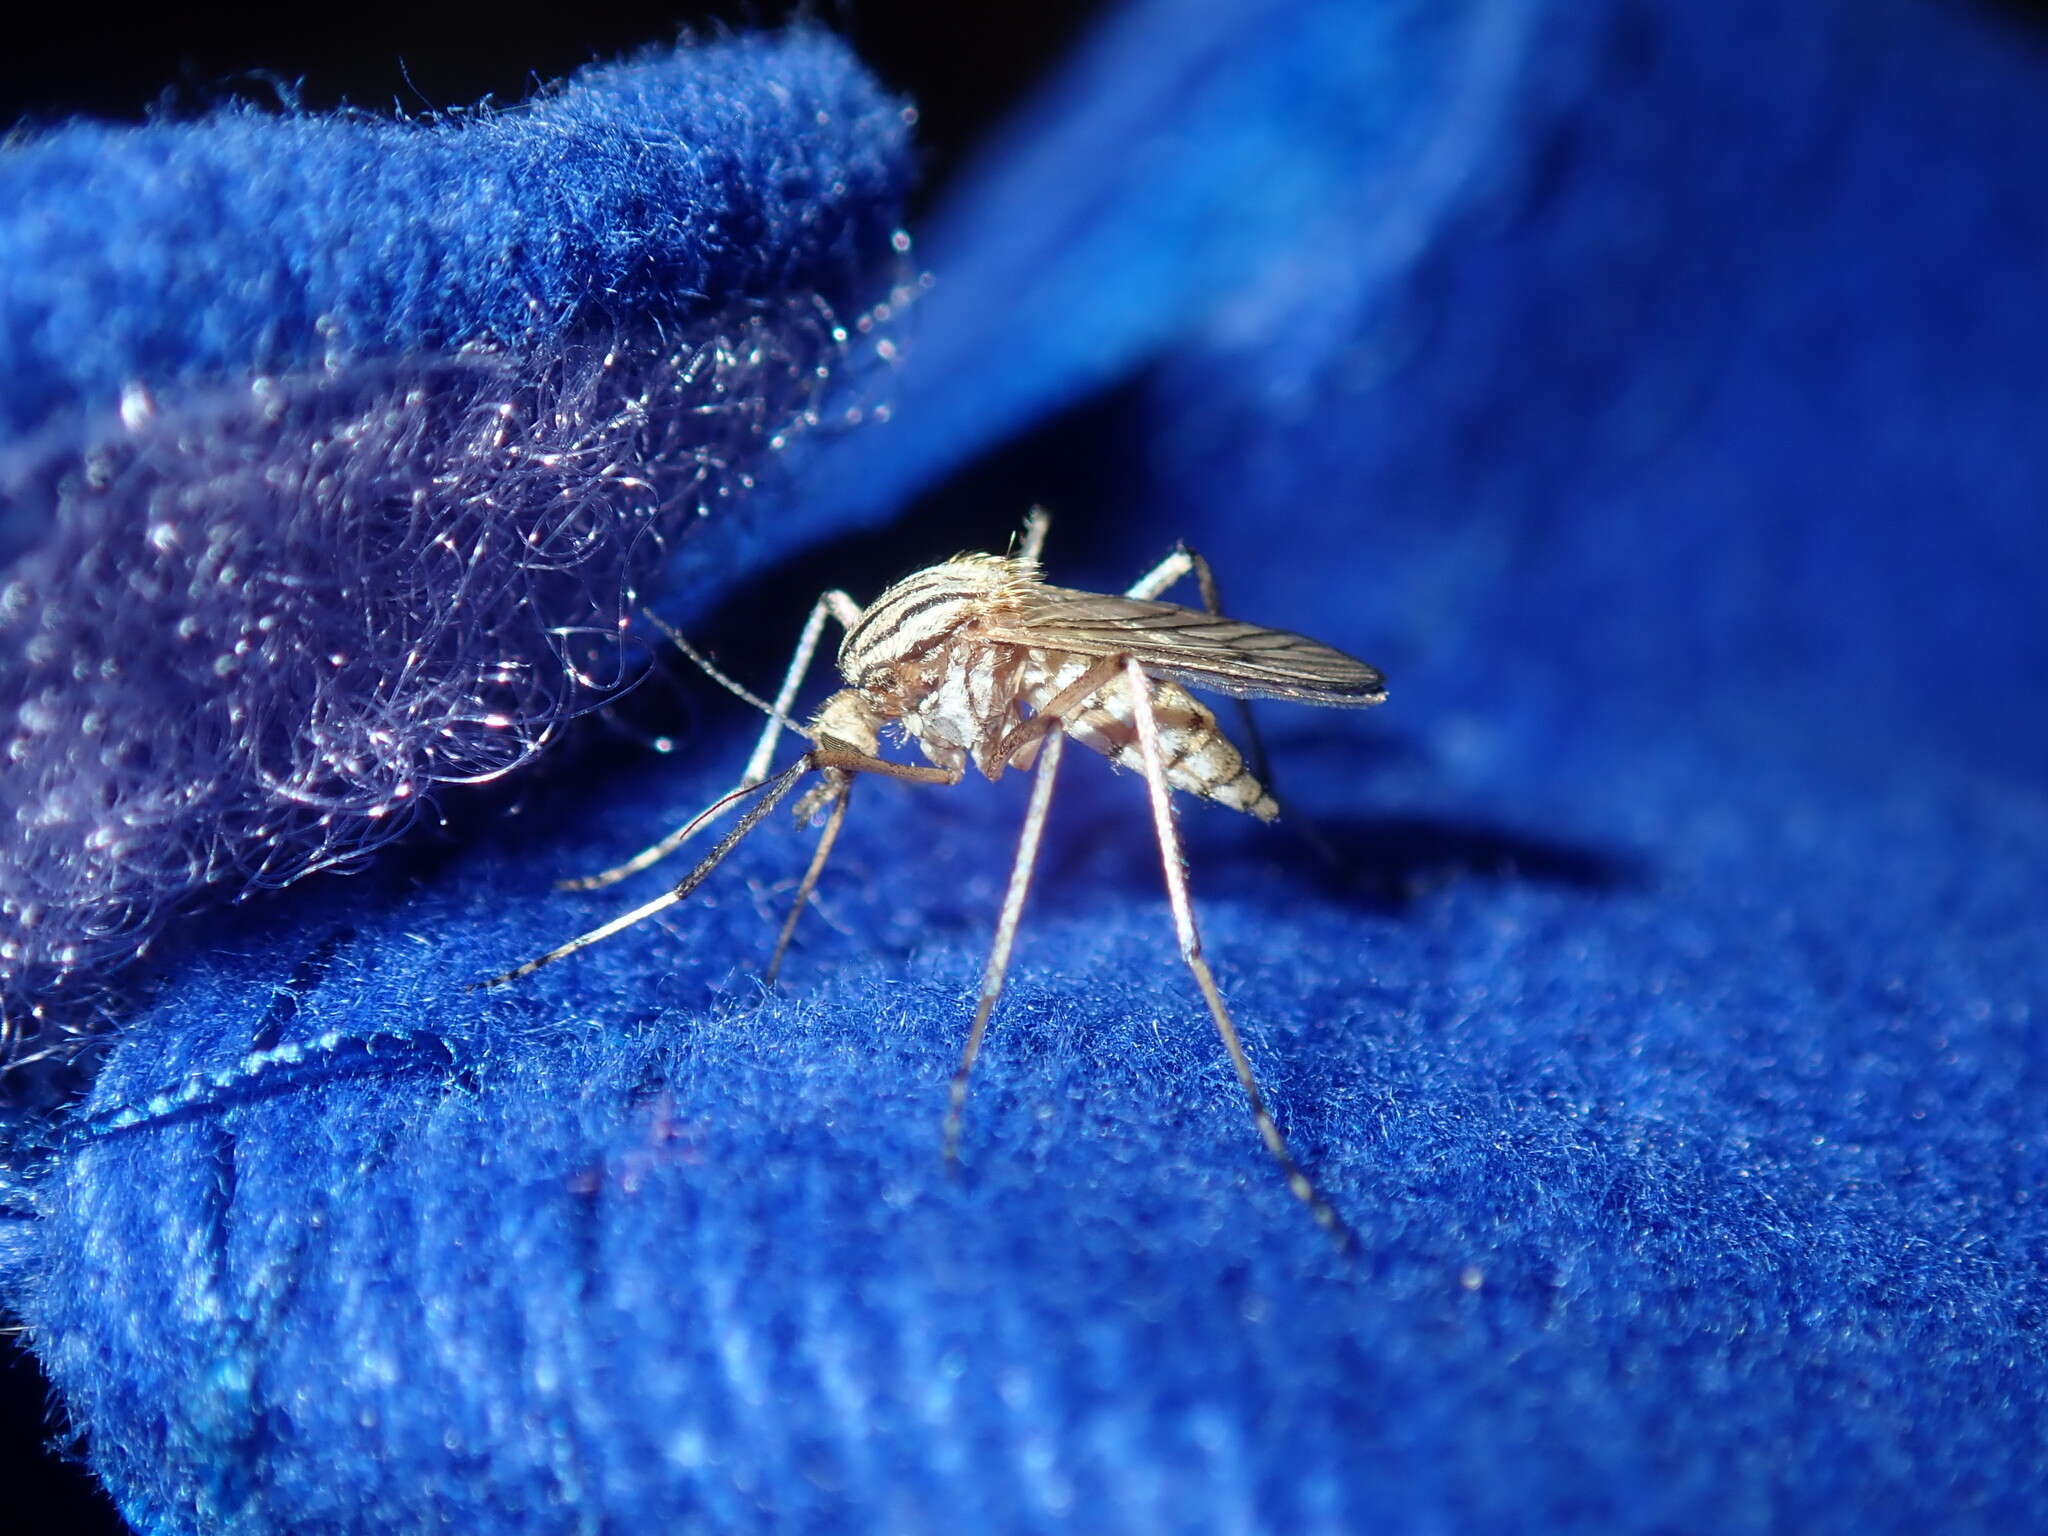 Image of Aedes vittiger (Skuse 1889)